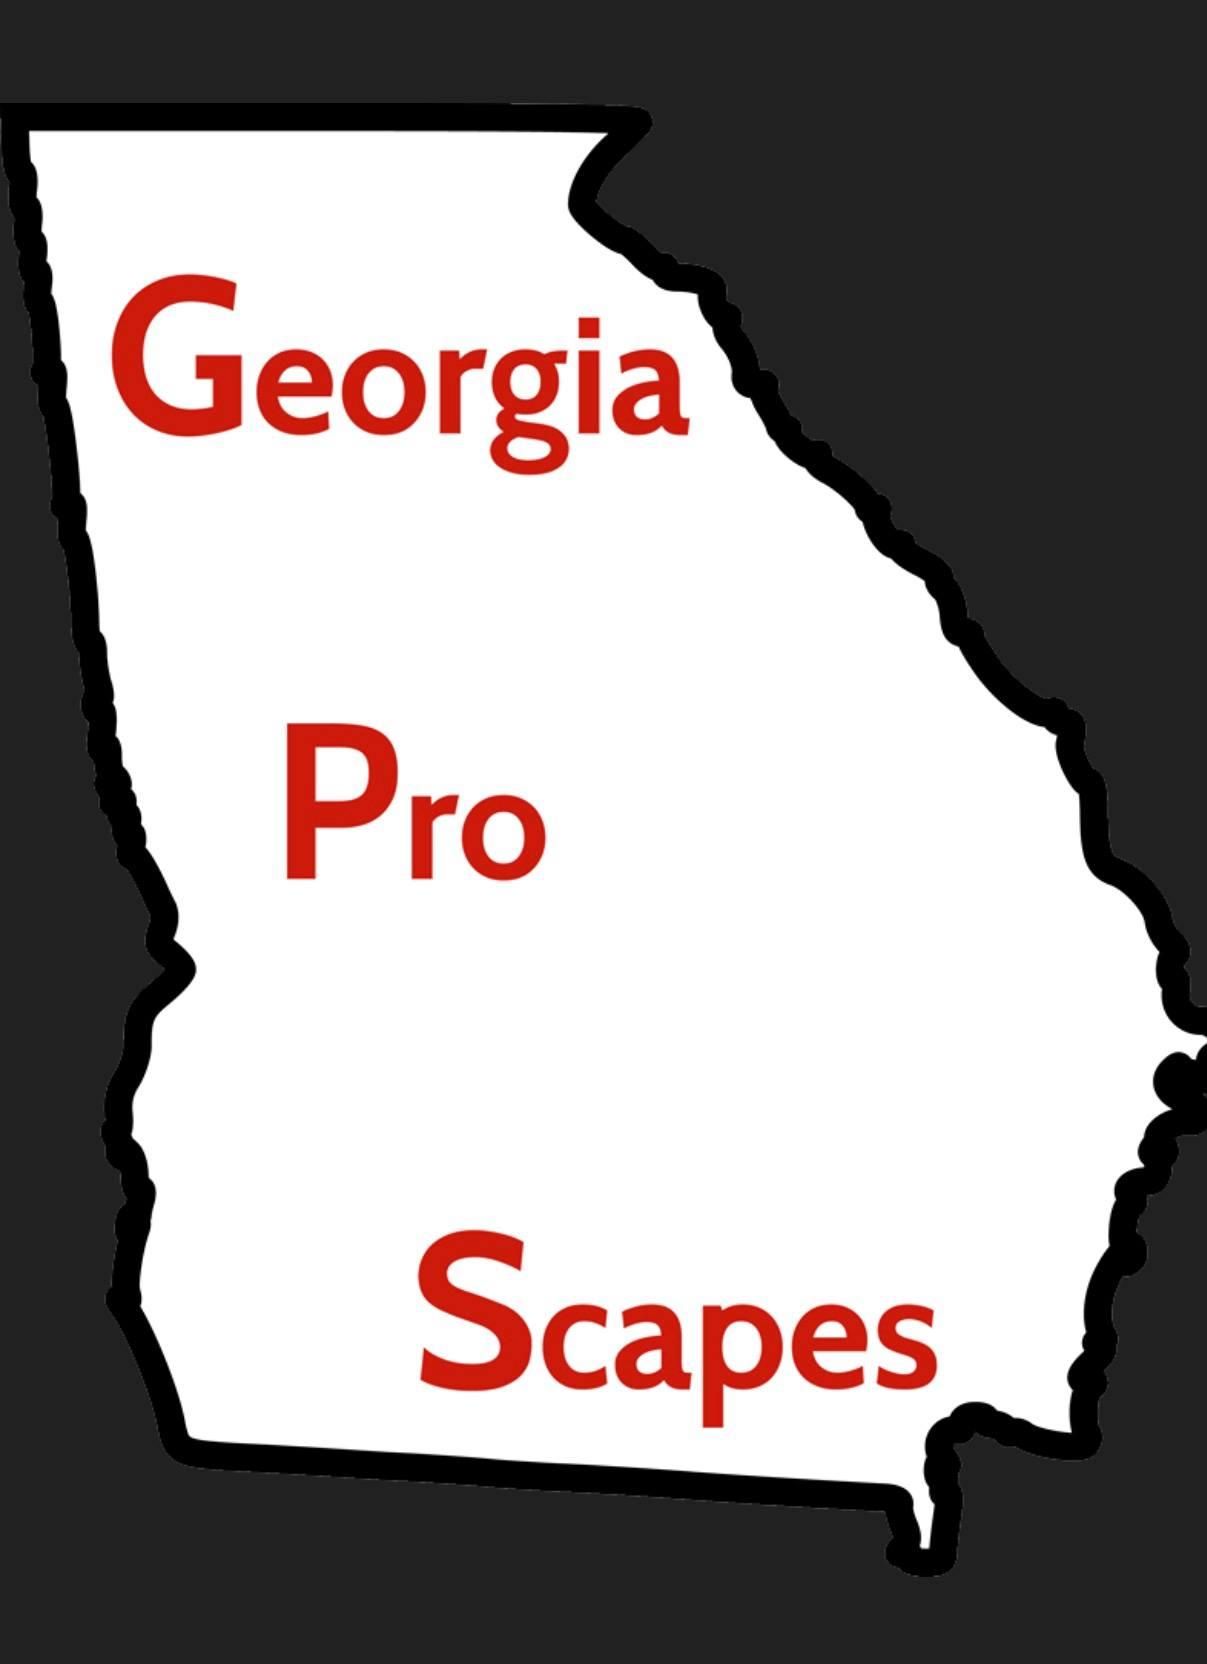 All Photos for Georgia Pro Scapes in Cumming, Georgia